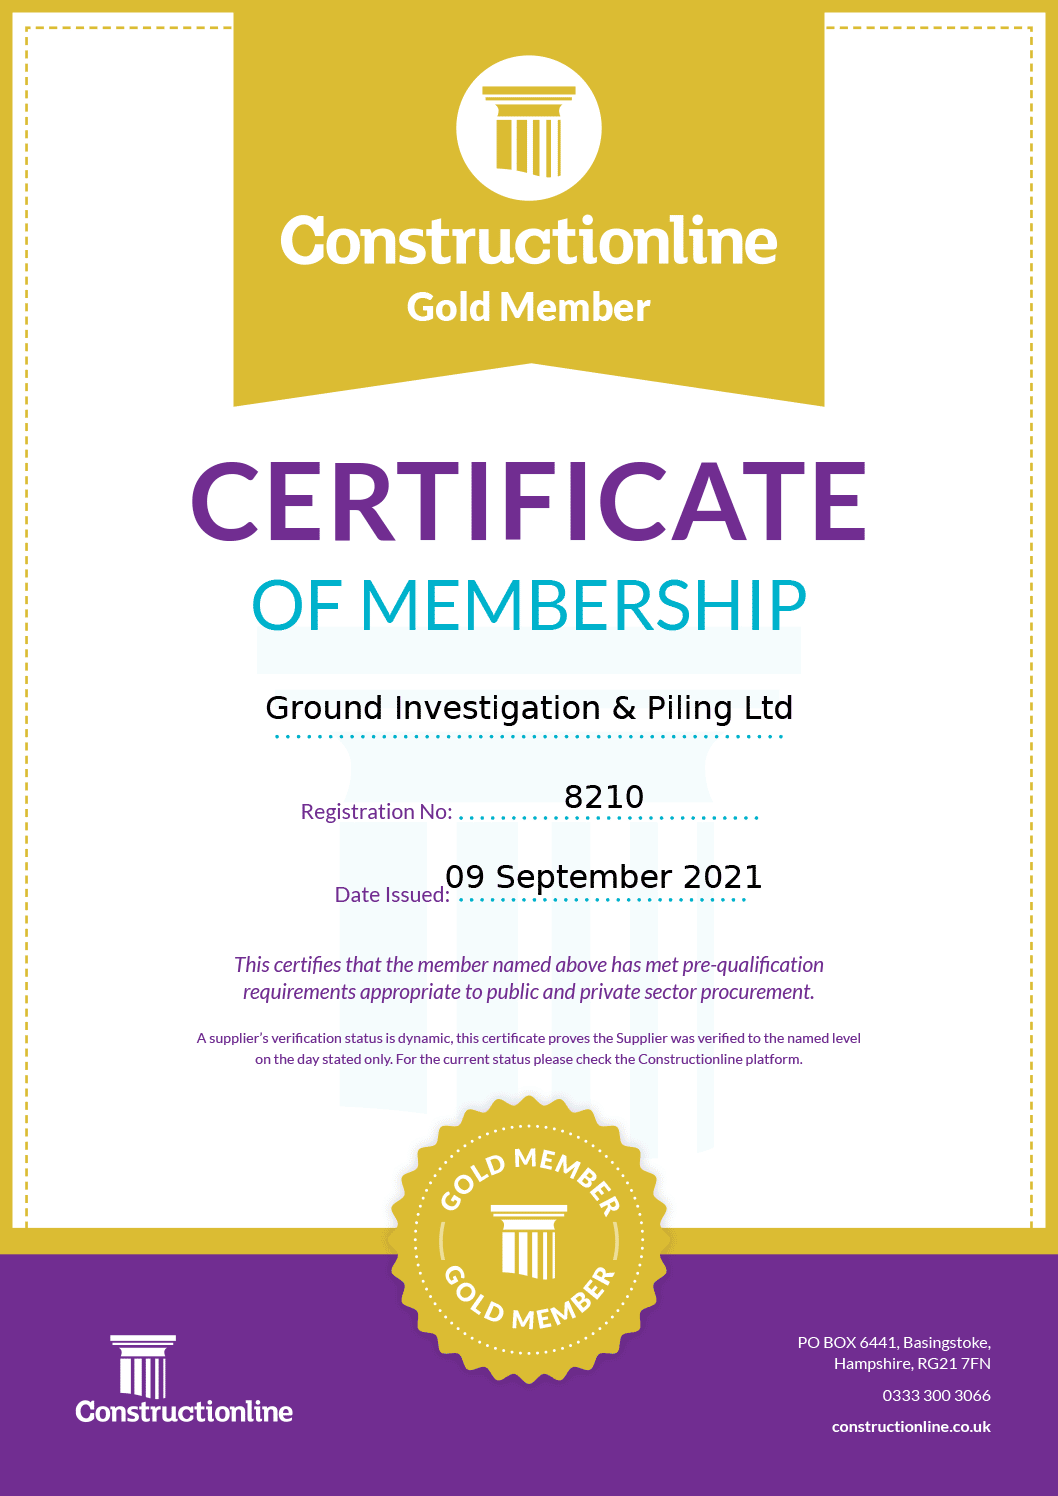 Constructionline Gold Certificate Expires 04 10 22